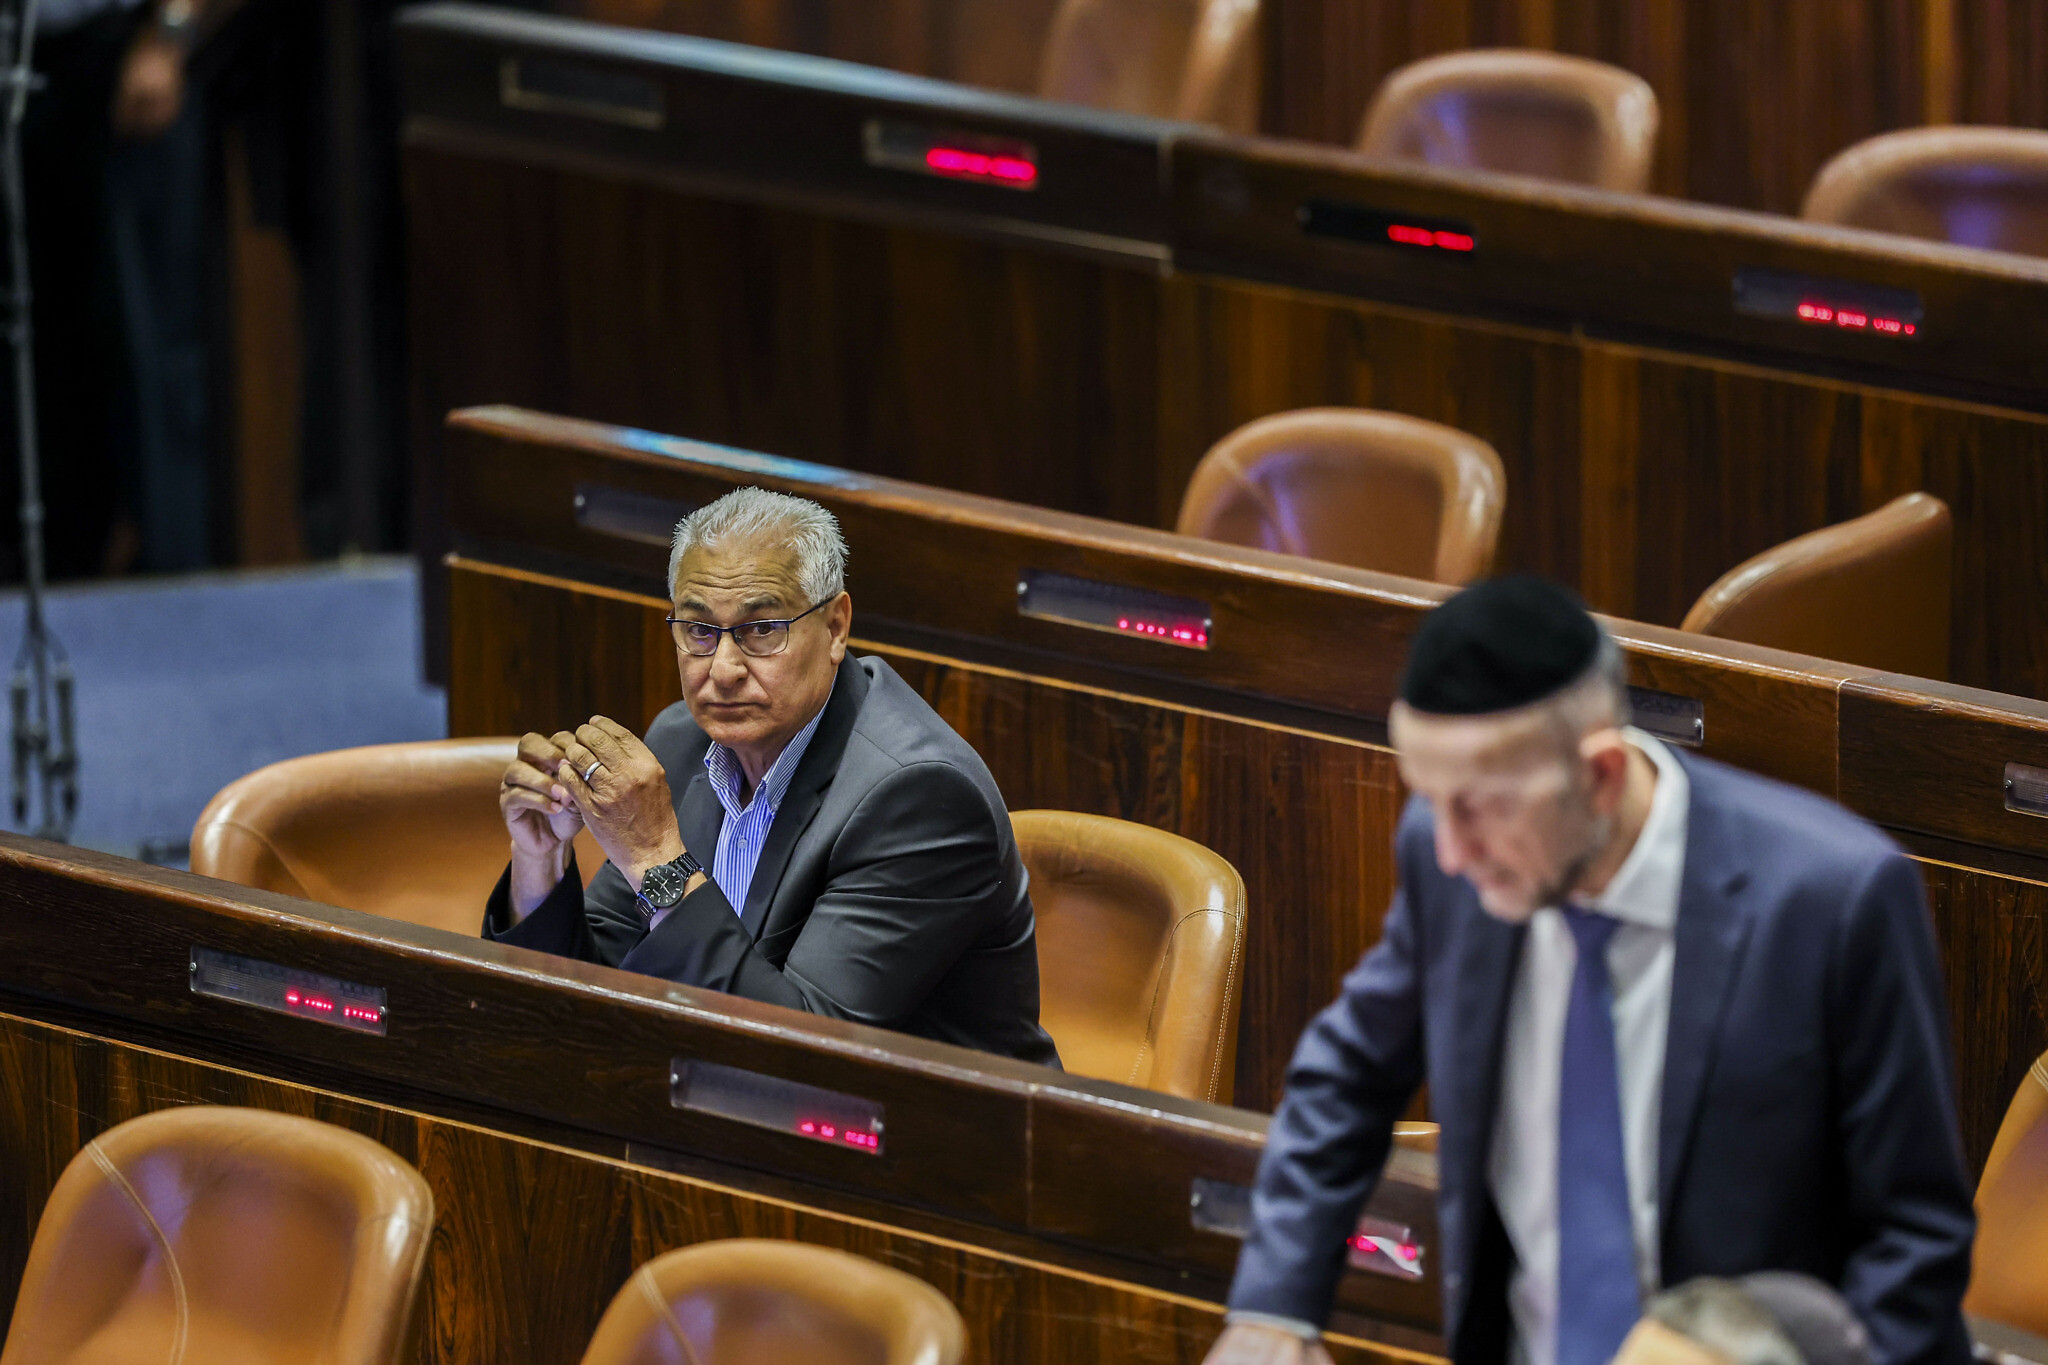 Ra’am MK Mazen Ghanaim (left) attends a vote on a West Bank bill at the Knesset, in Jerusalem on June 6, 2022. (Yonatan Sindel/Flash90)